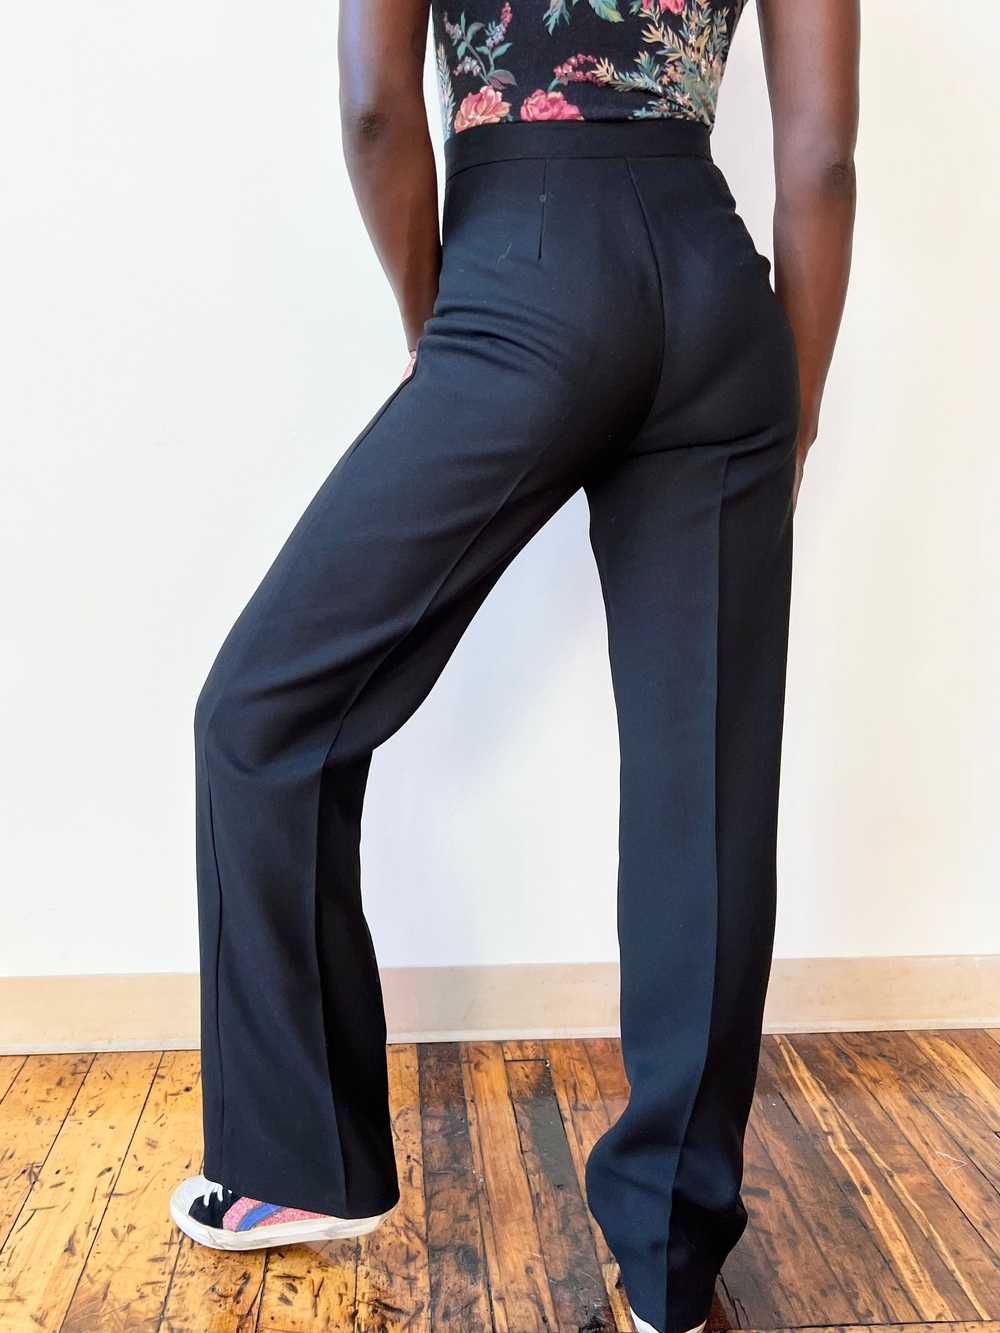 70’s High Rise Flare Black Trouser Pants Slacks - image 4